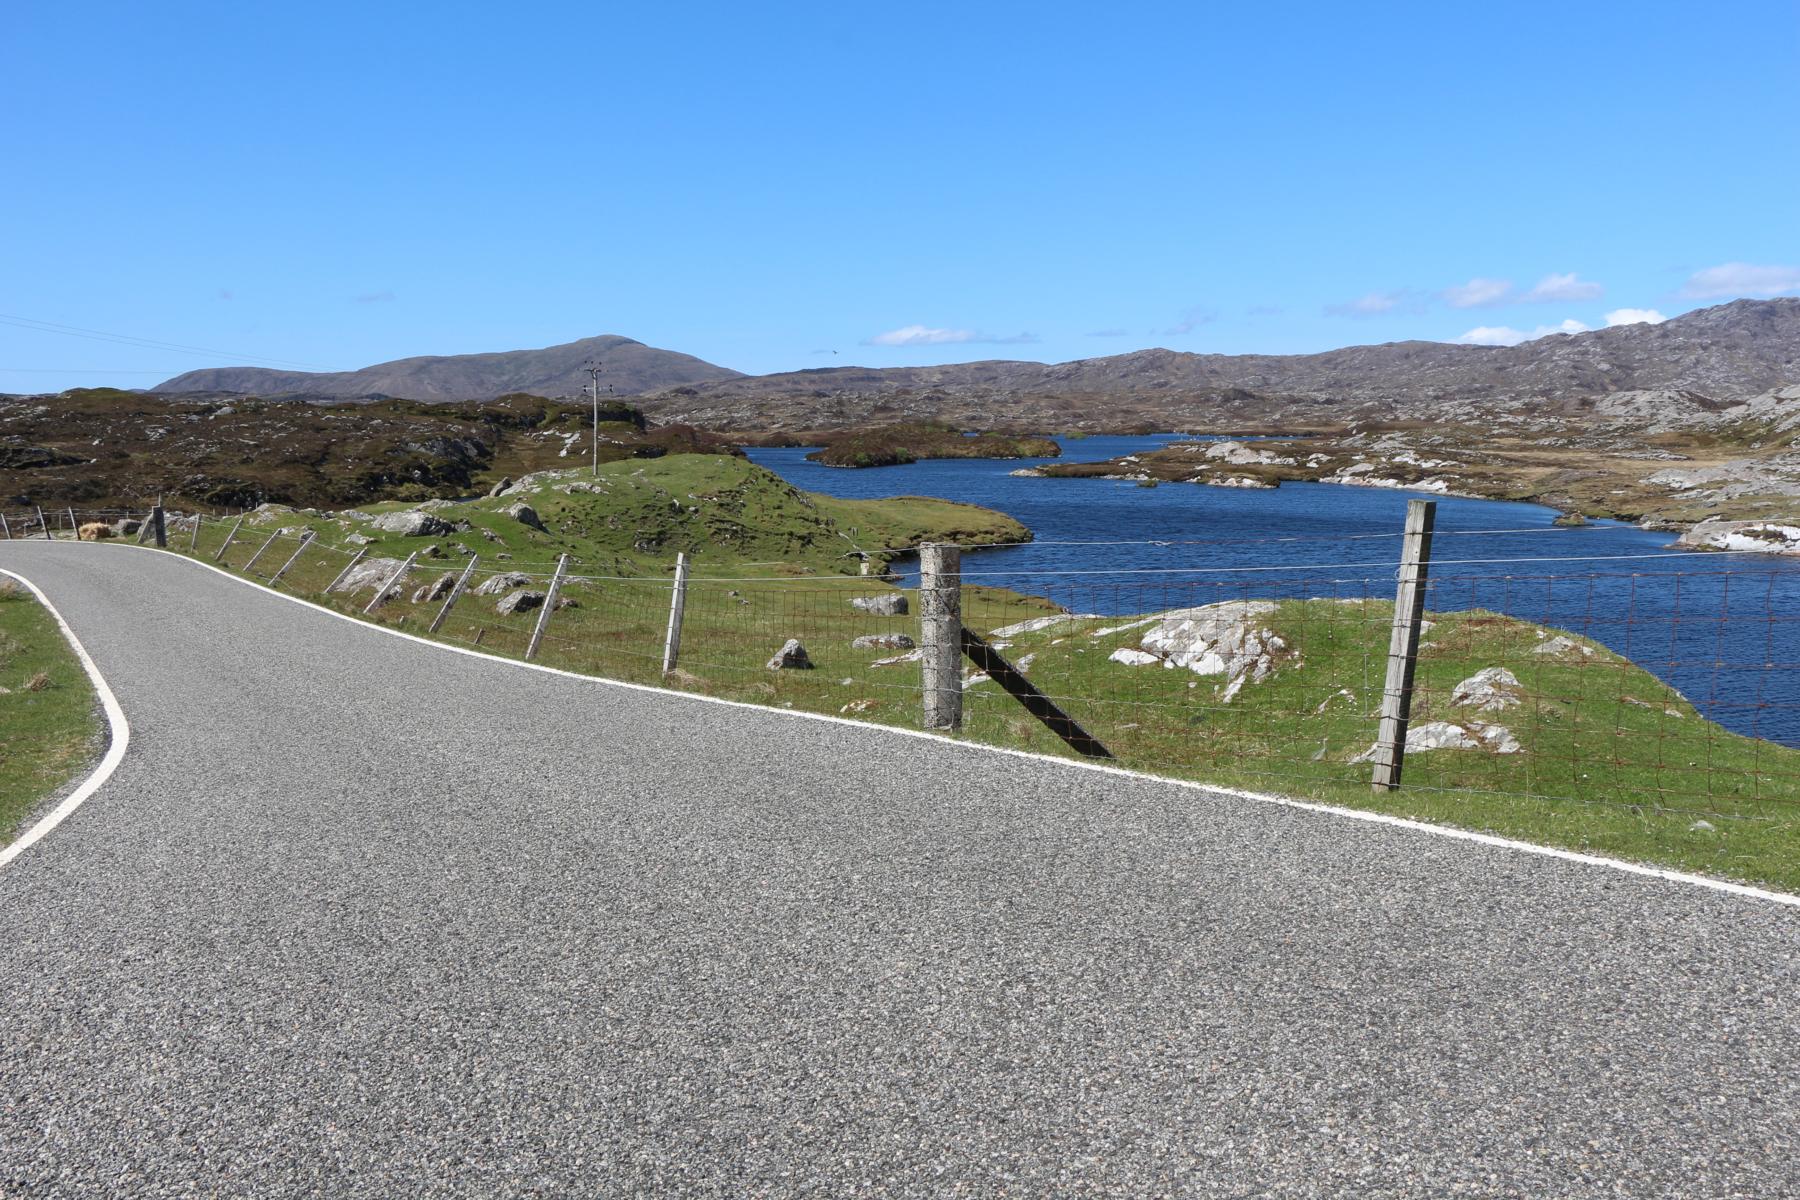 Such beautiful scenery is truly rare. Scottish? Norwegian? -> Hebridean!